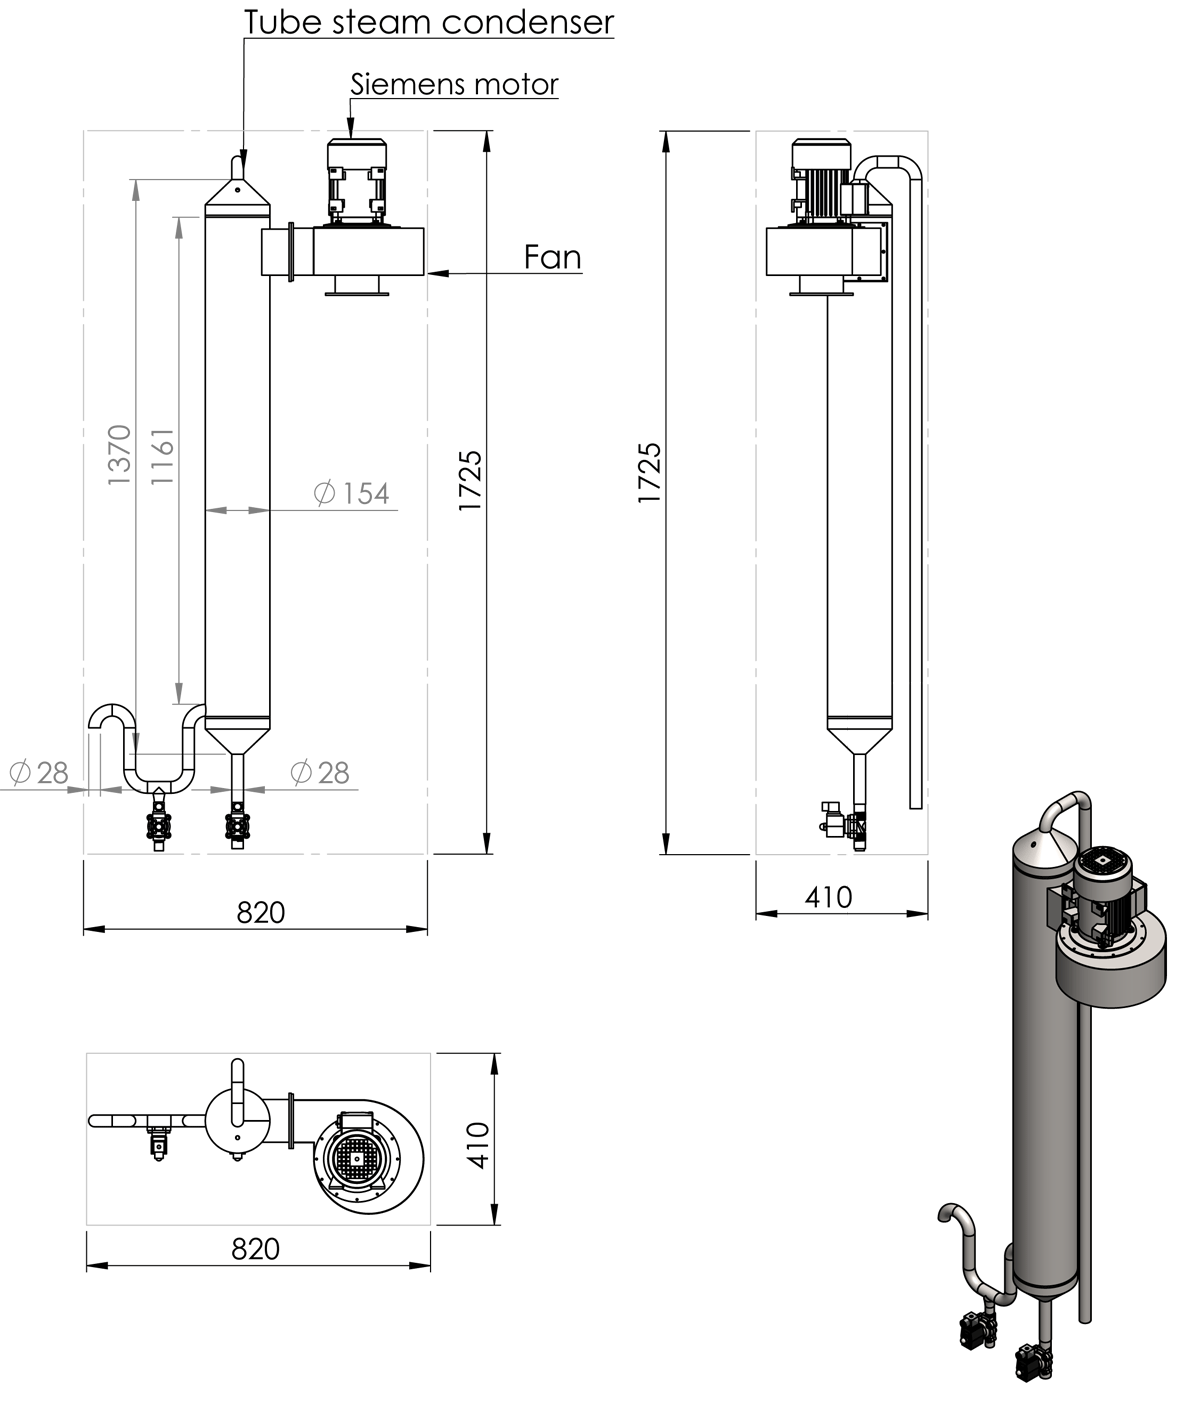 BVP-600 Vapor condenser